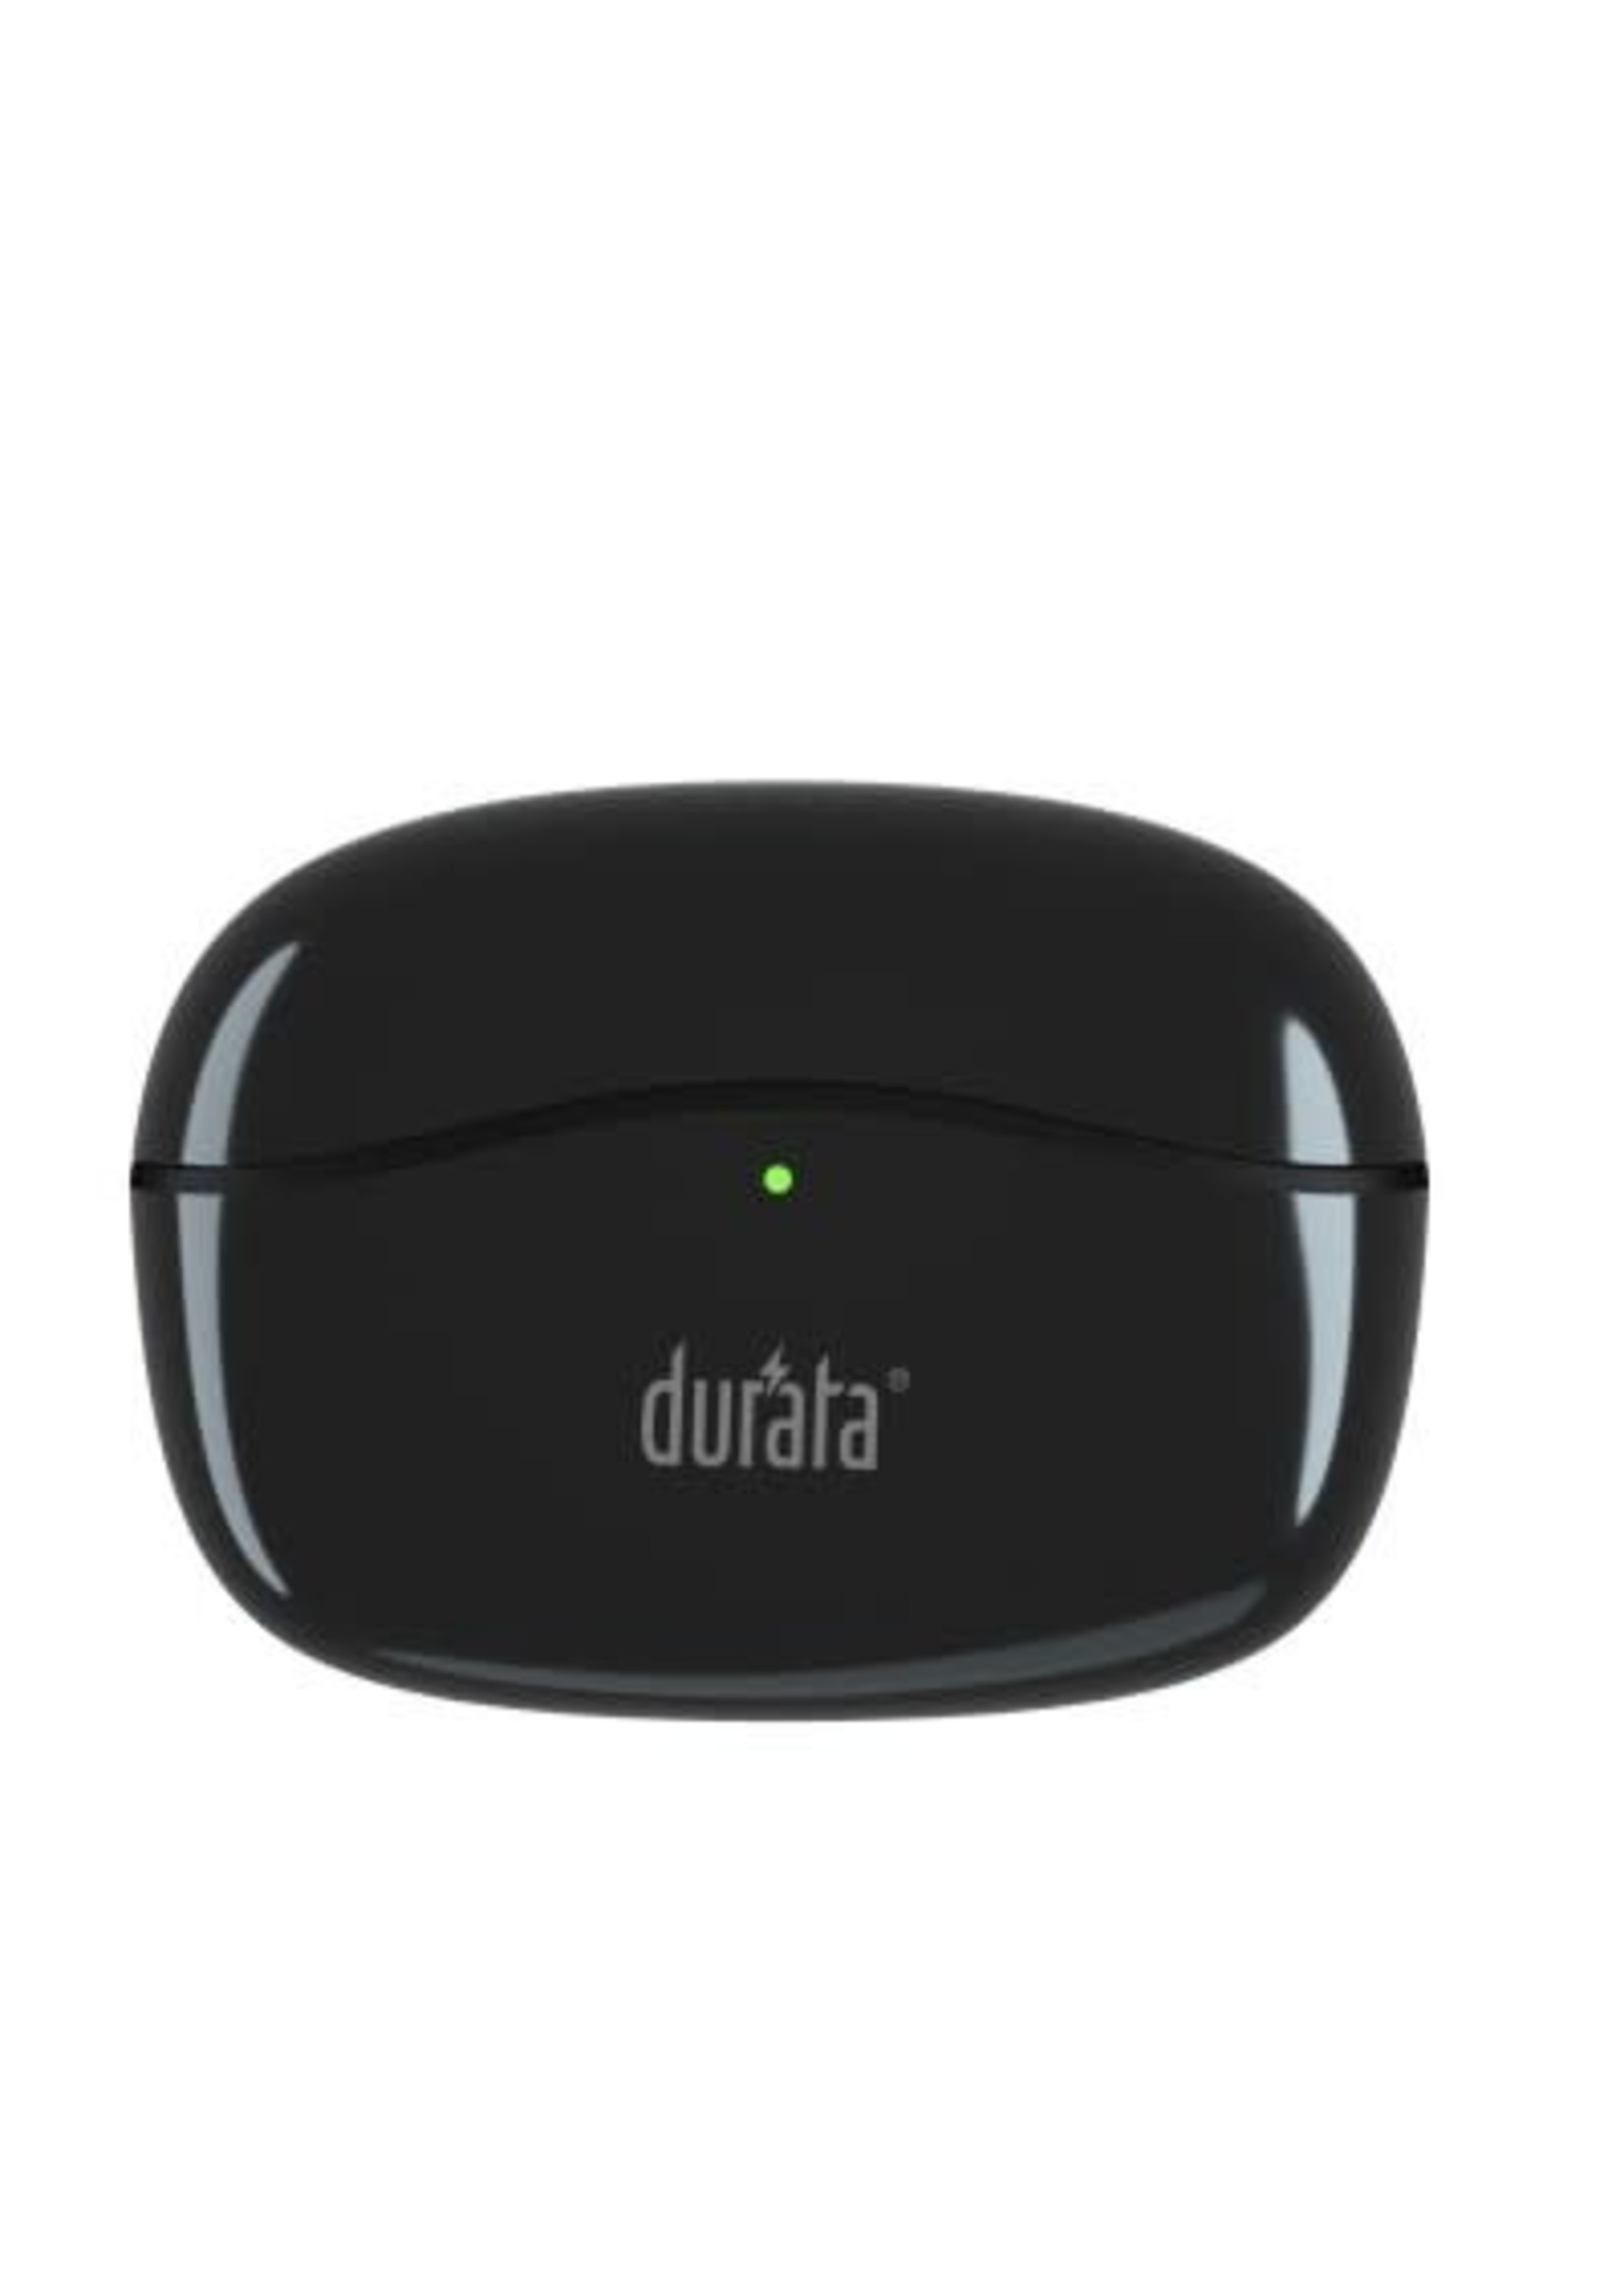 Durata Kristalheldere draadloze headset - zwart - DRBT110B - Durata